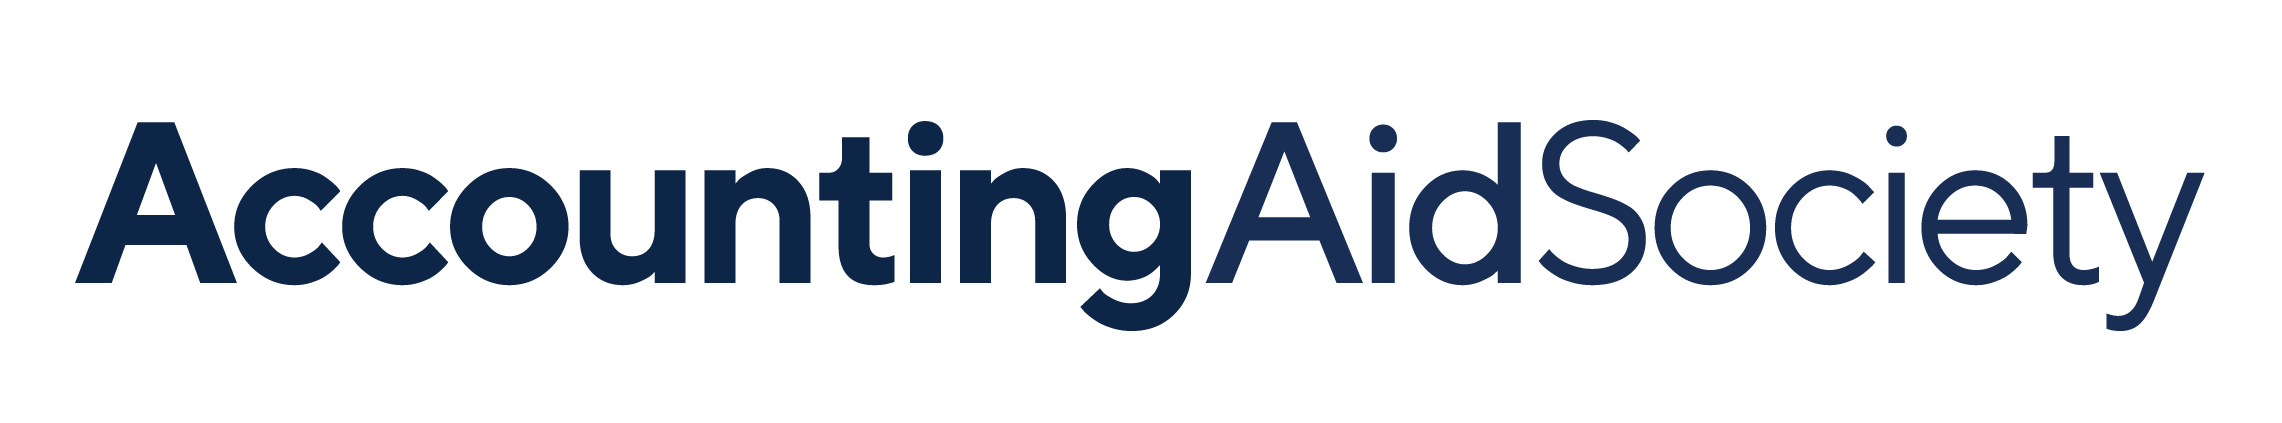 Accounting Aid Society Logo